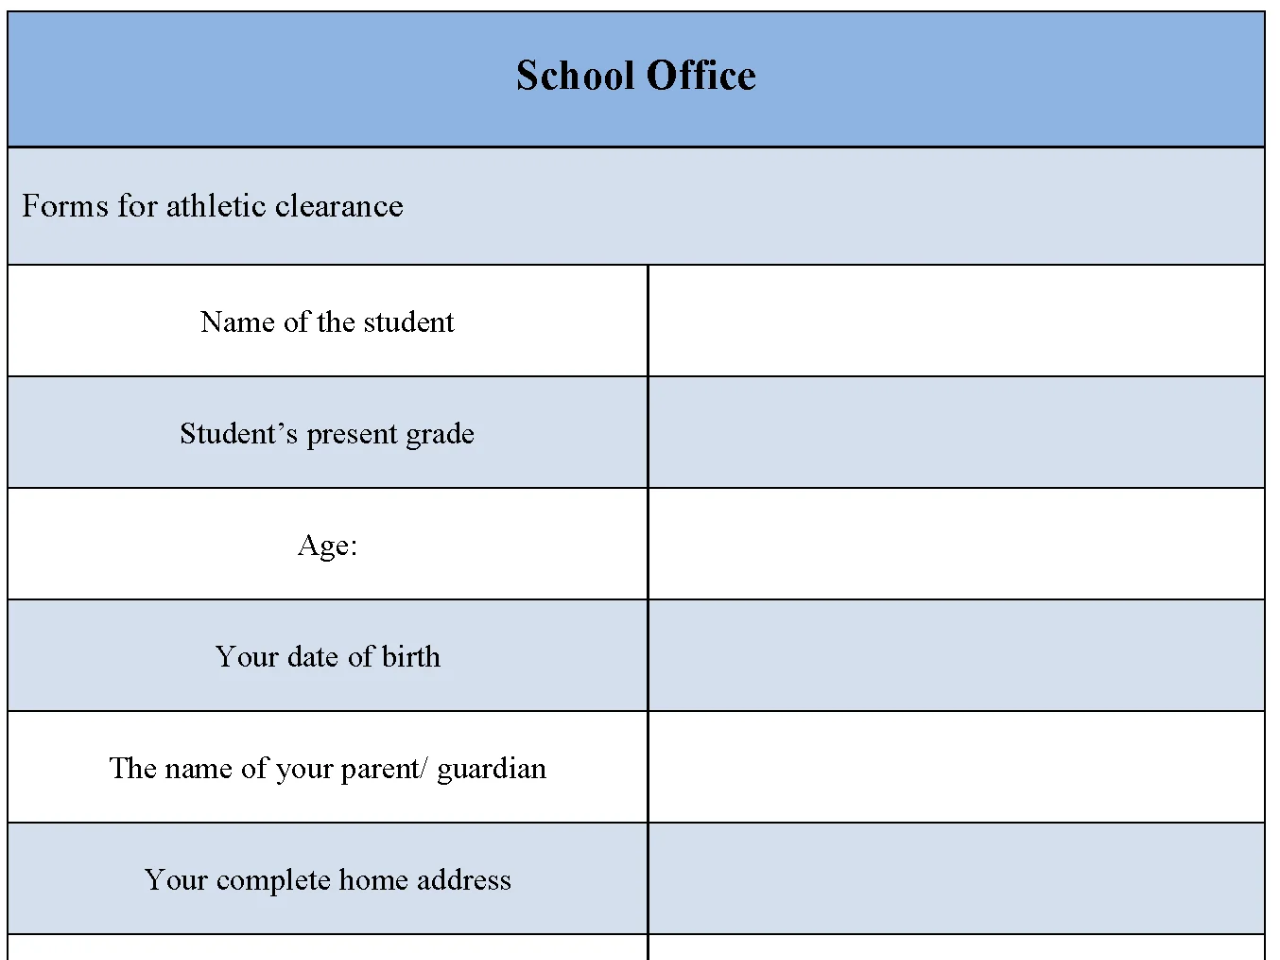 School Office Form